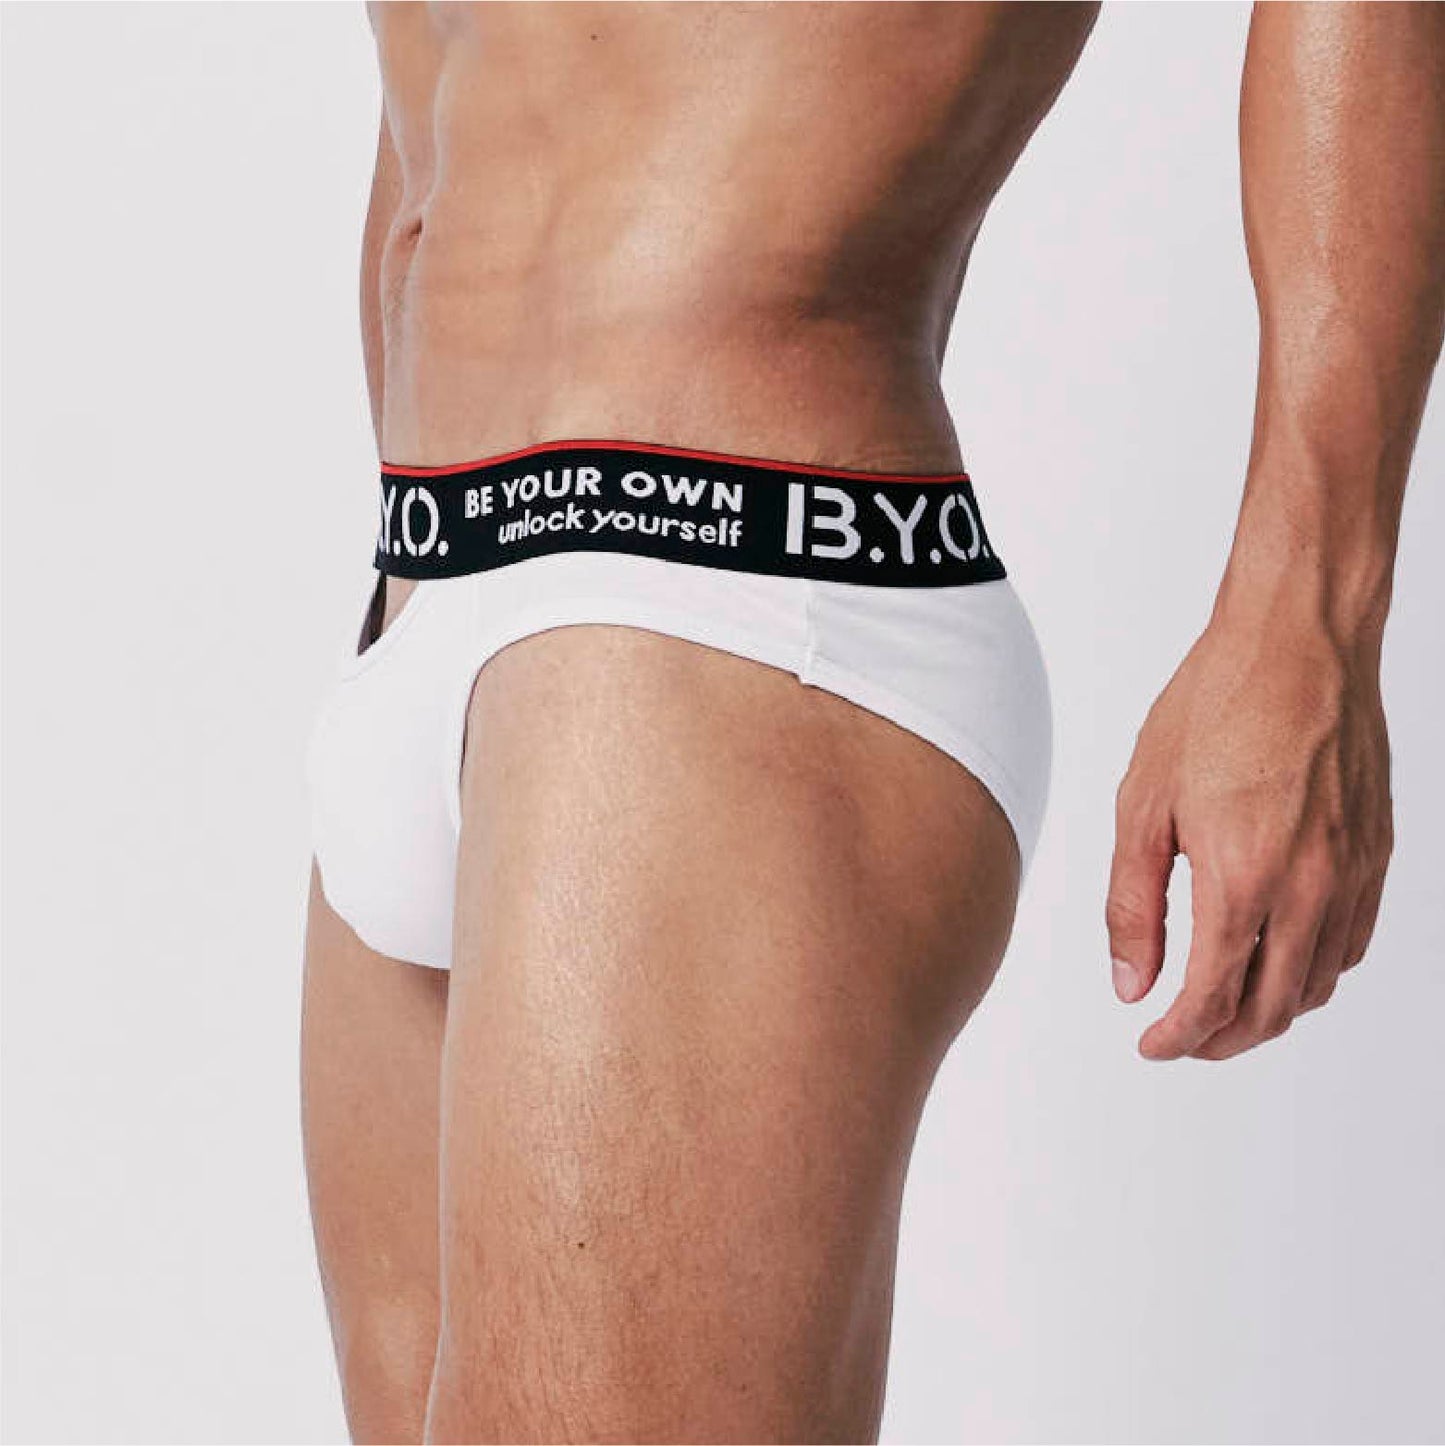 B.Y.O.BeYourOwn-Hole Briefs-Cotton White